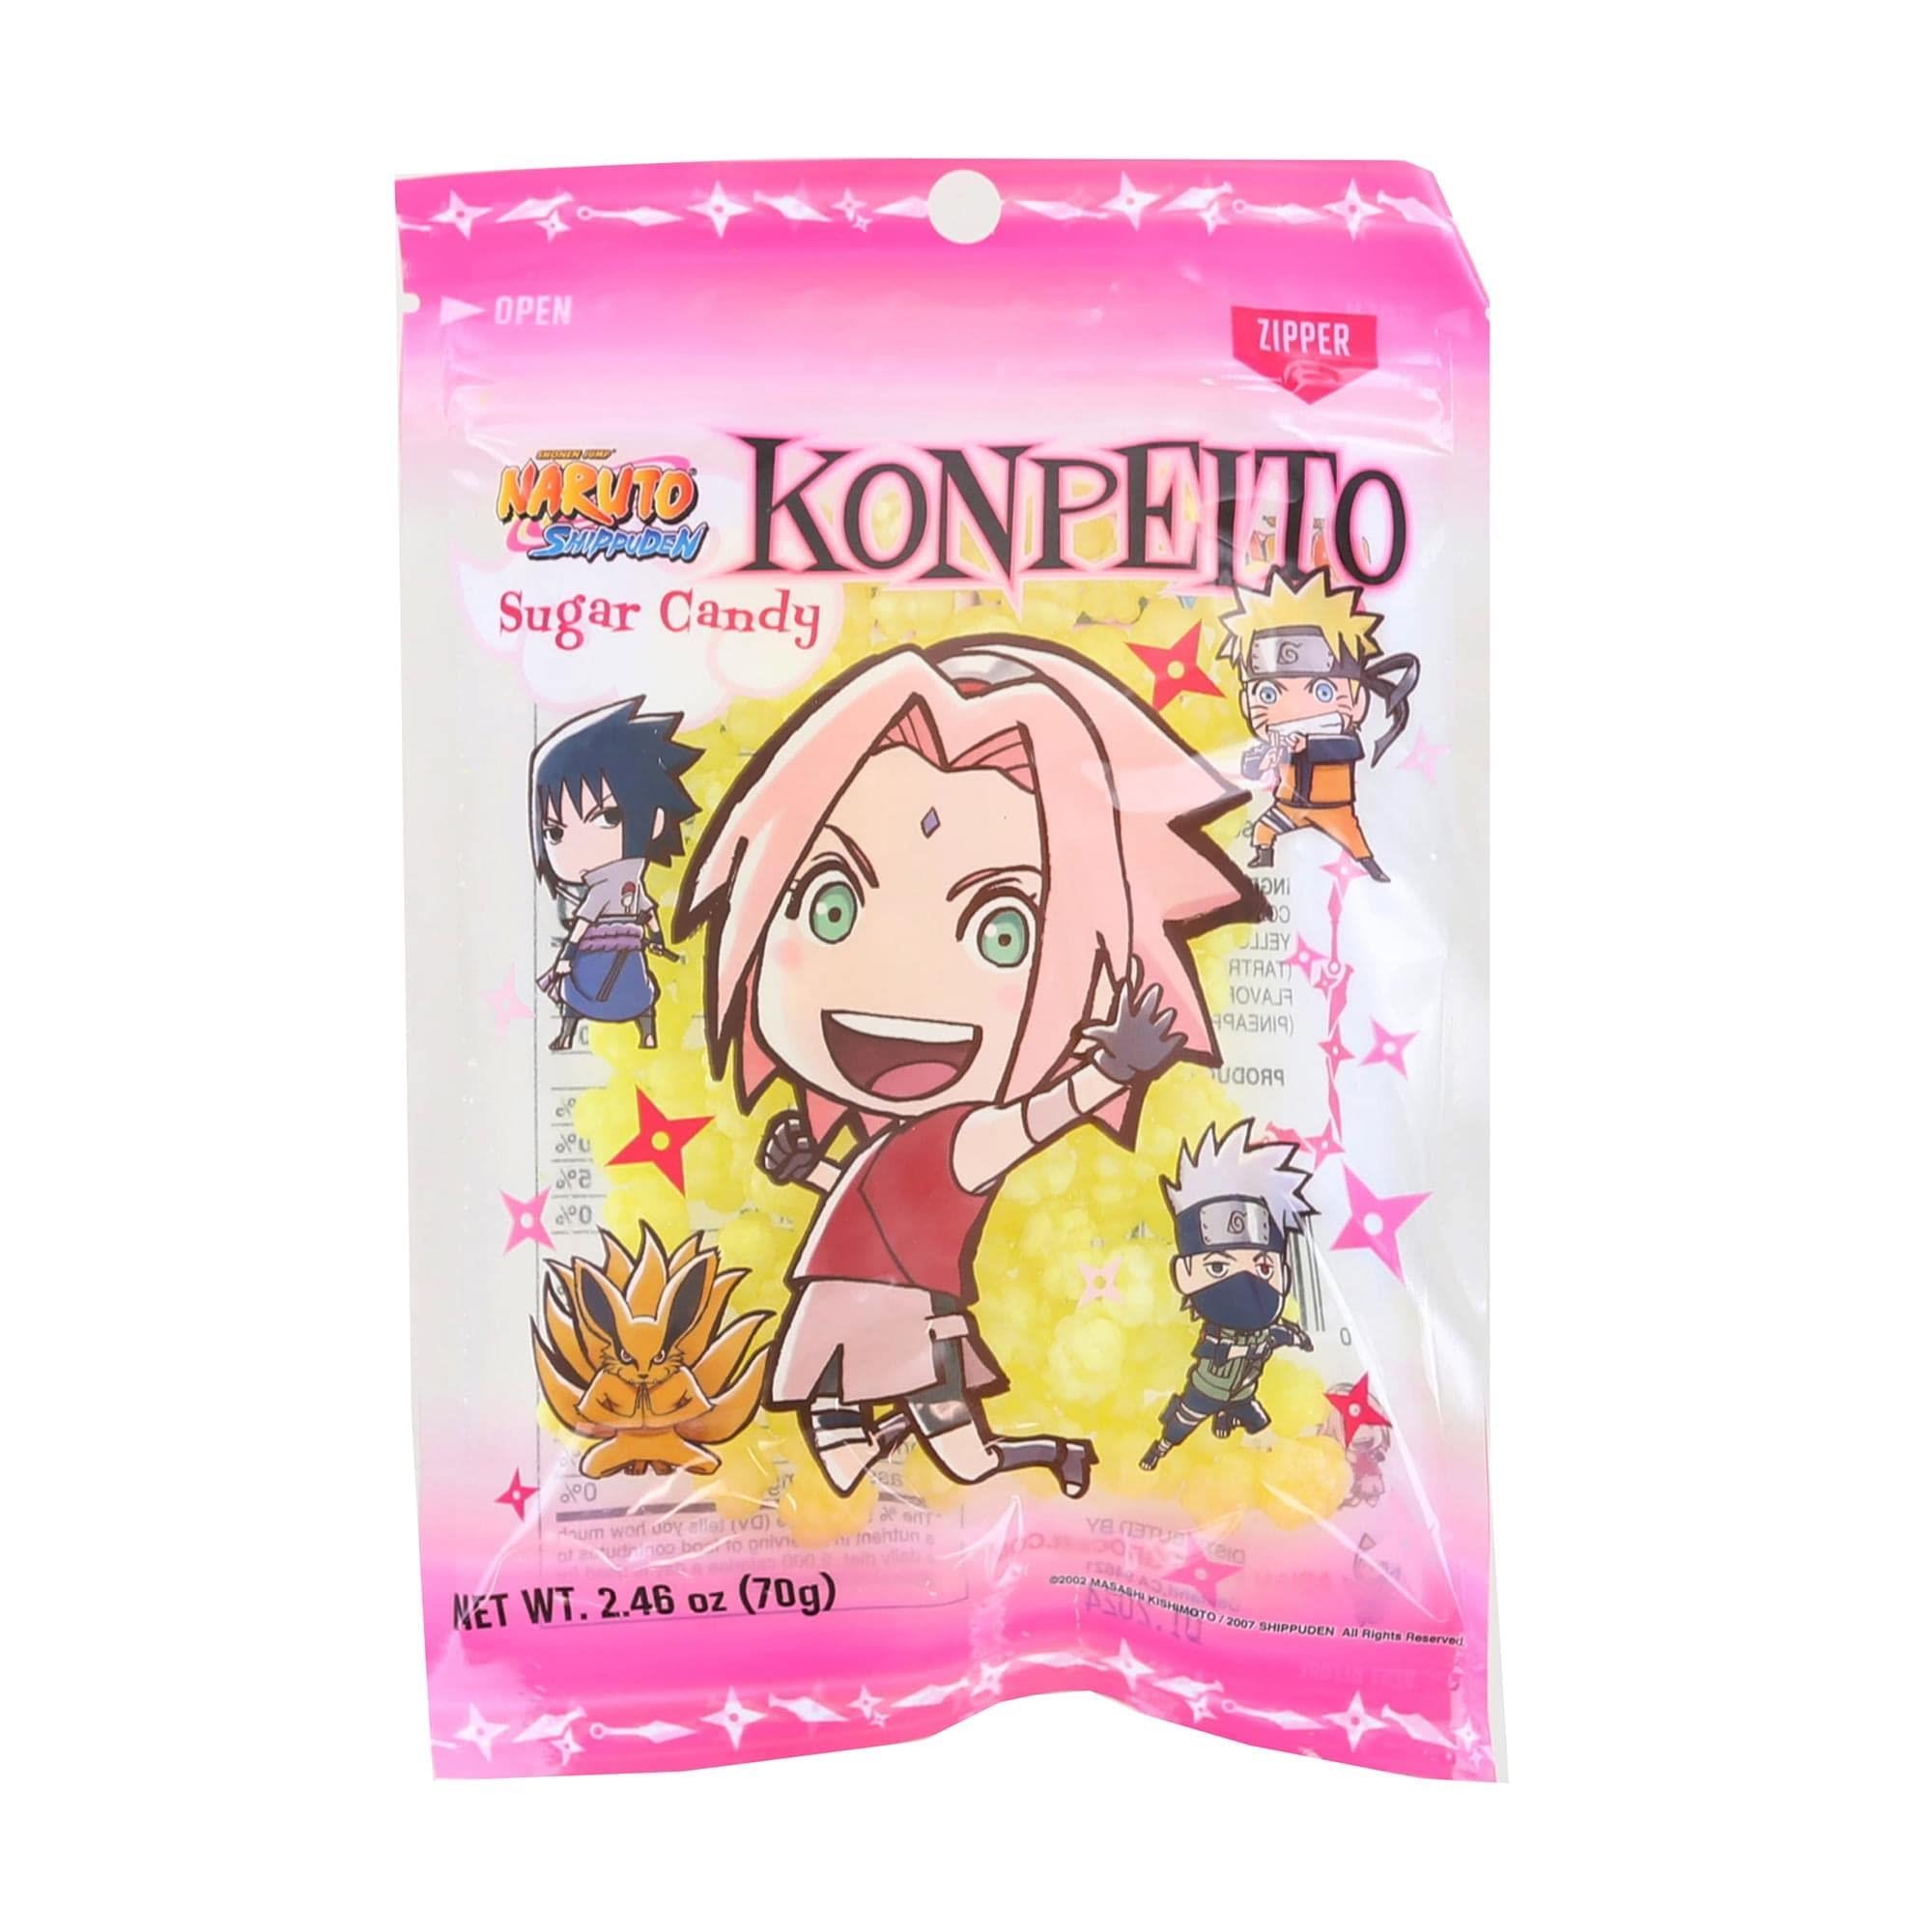 Naruto Shippudem Konpeito Japanese Sugar Candy 2.46oz /70g (Pineapple, 2 Packs)